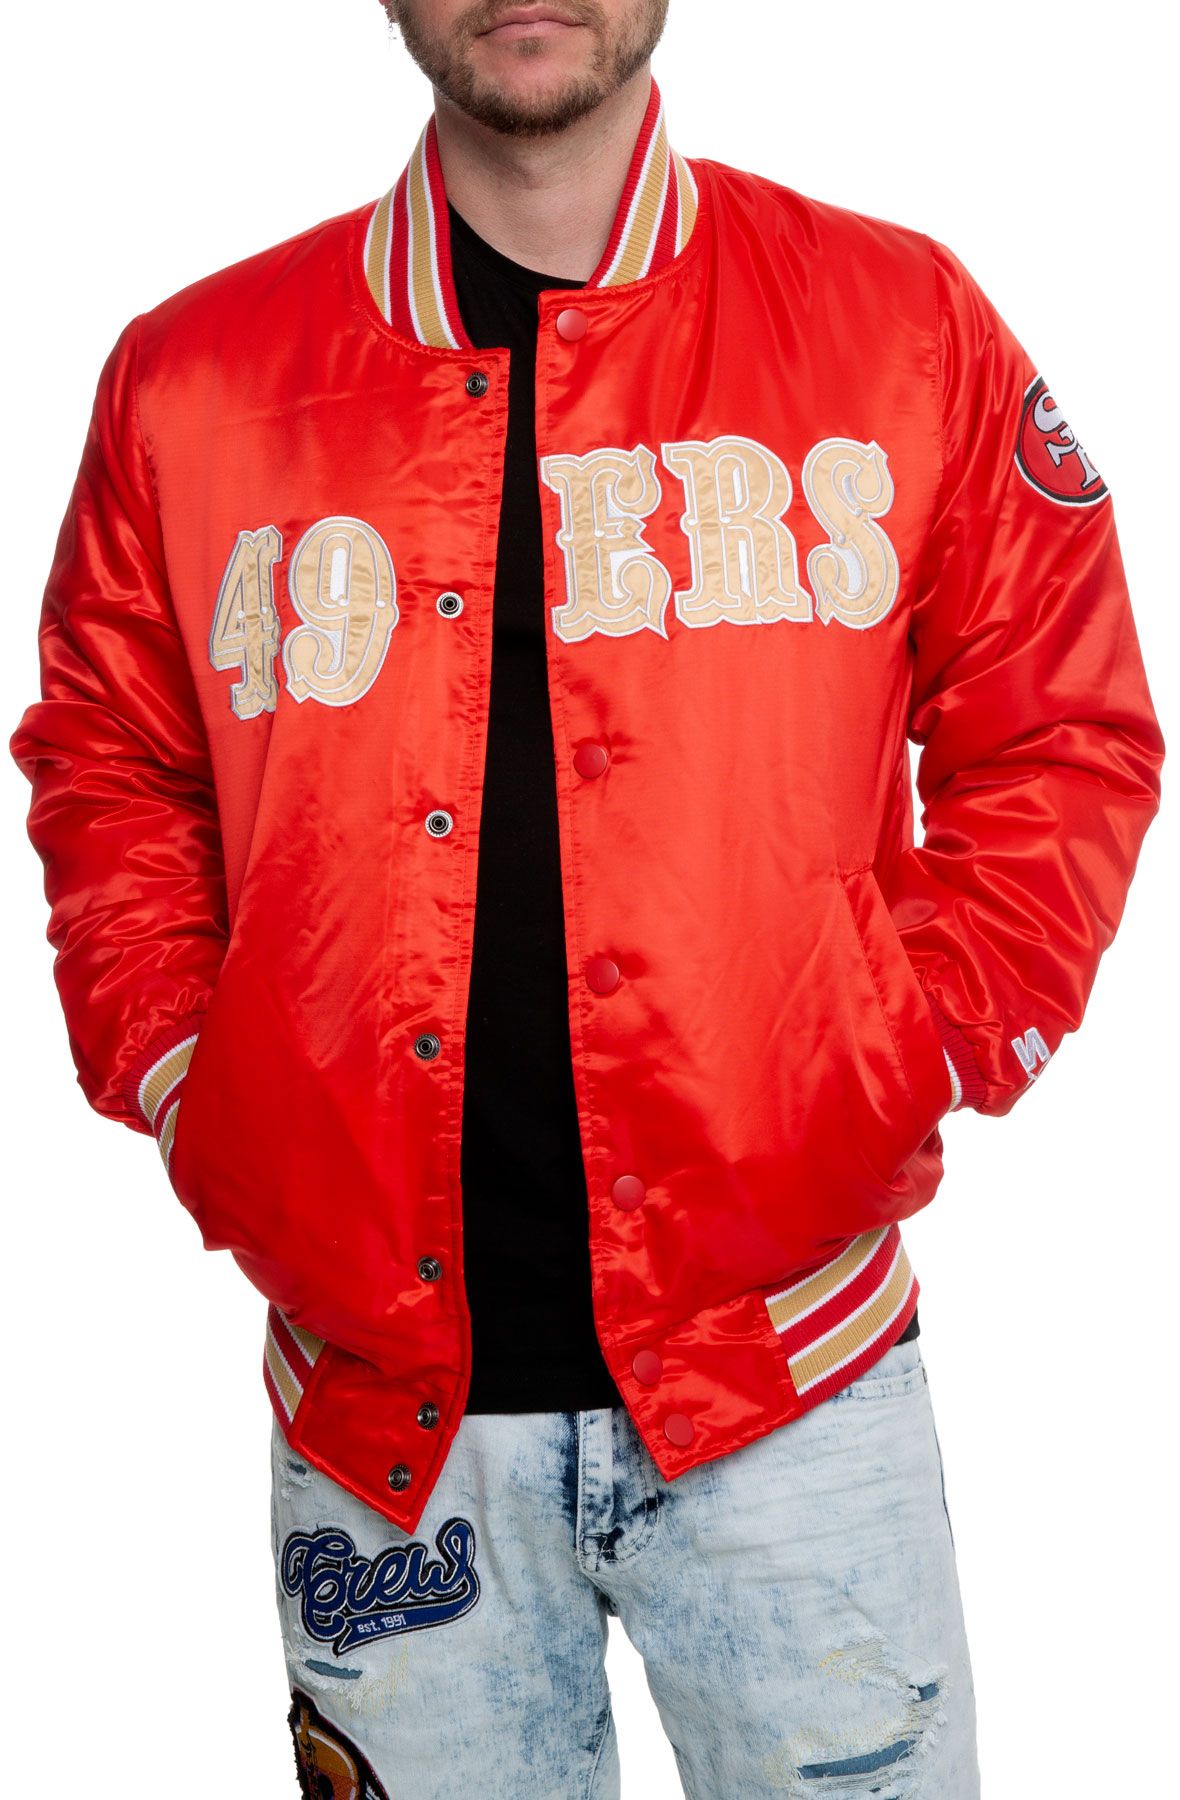 49ers jersey jacket